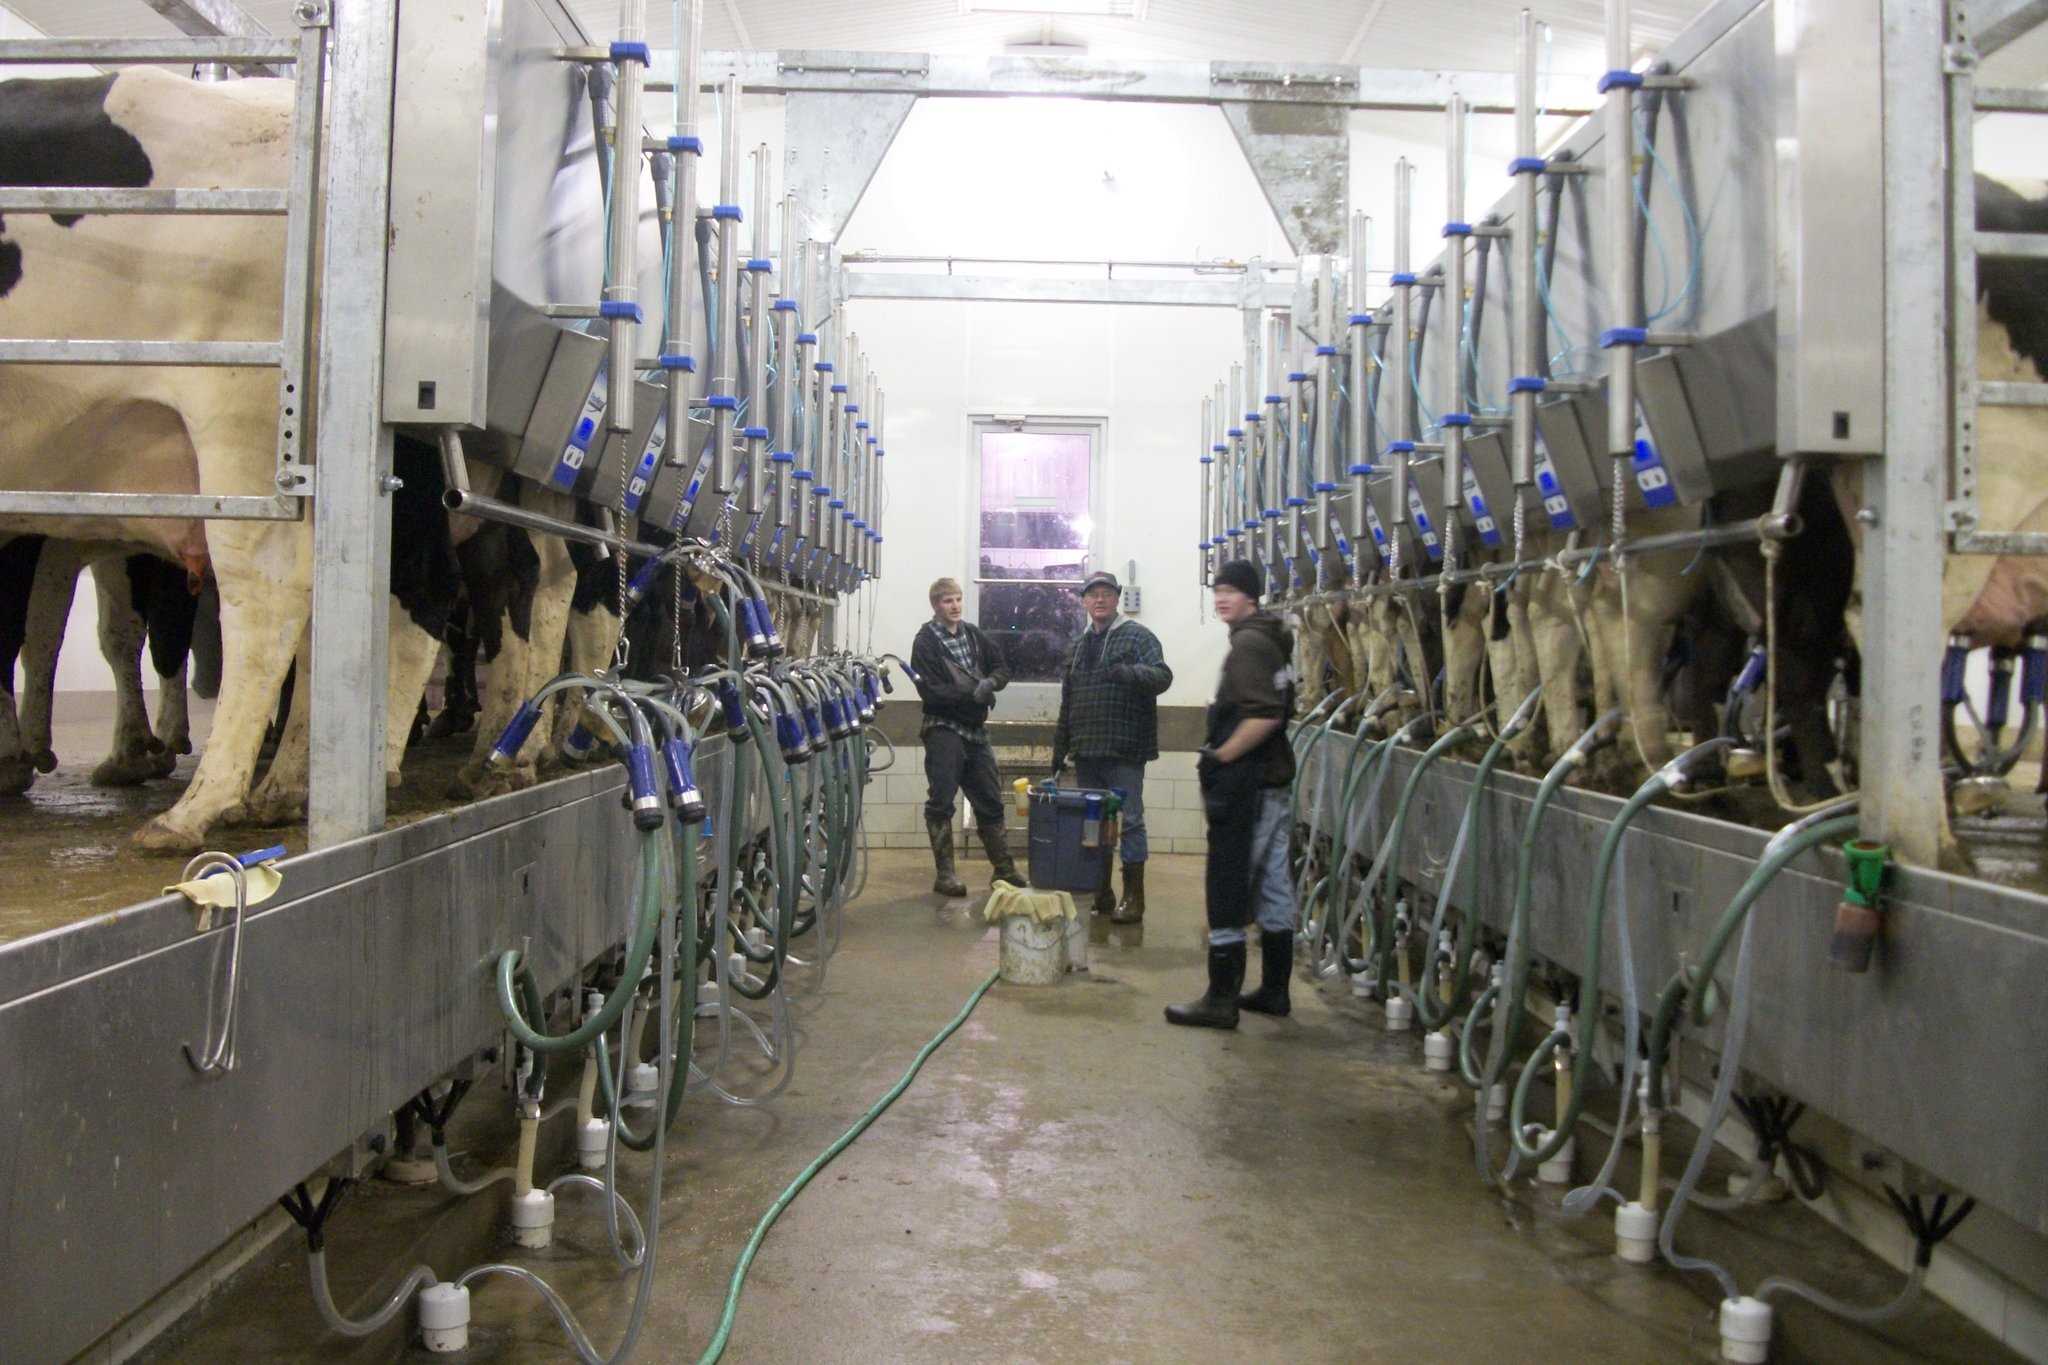 Milking parlor